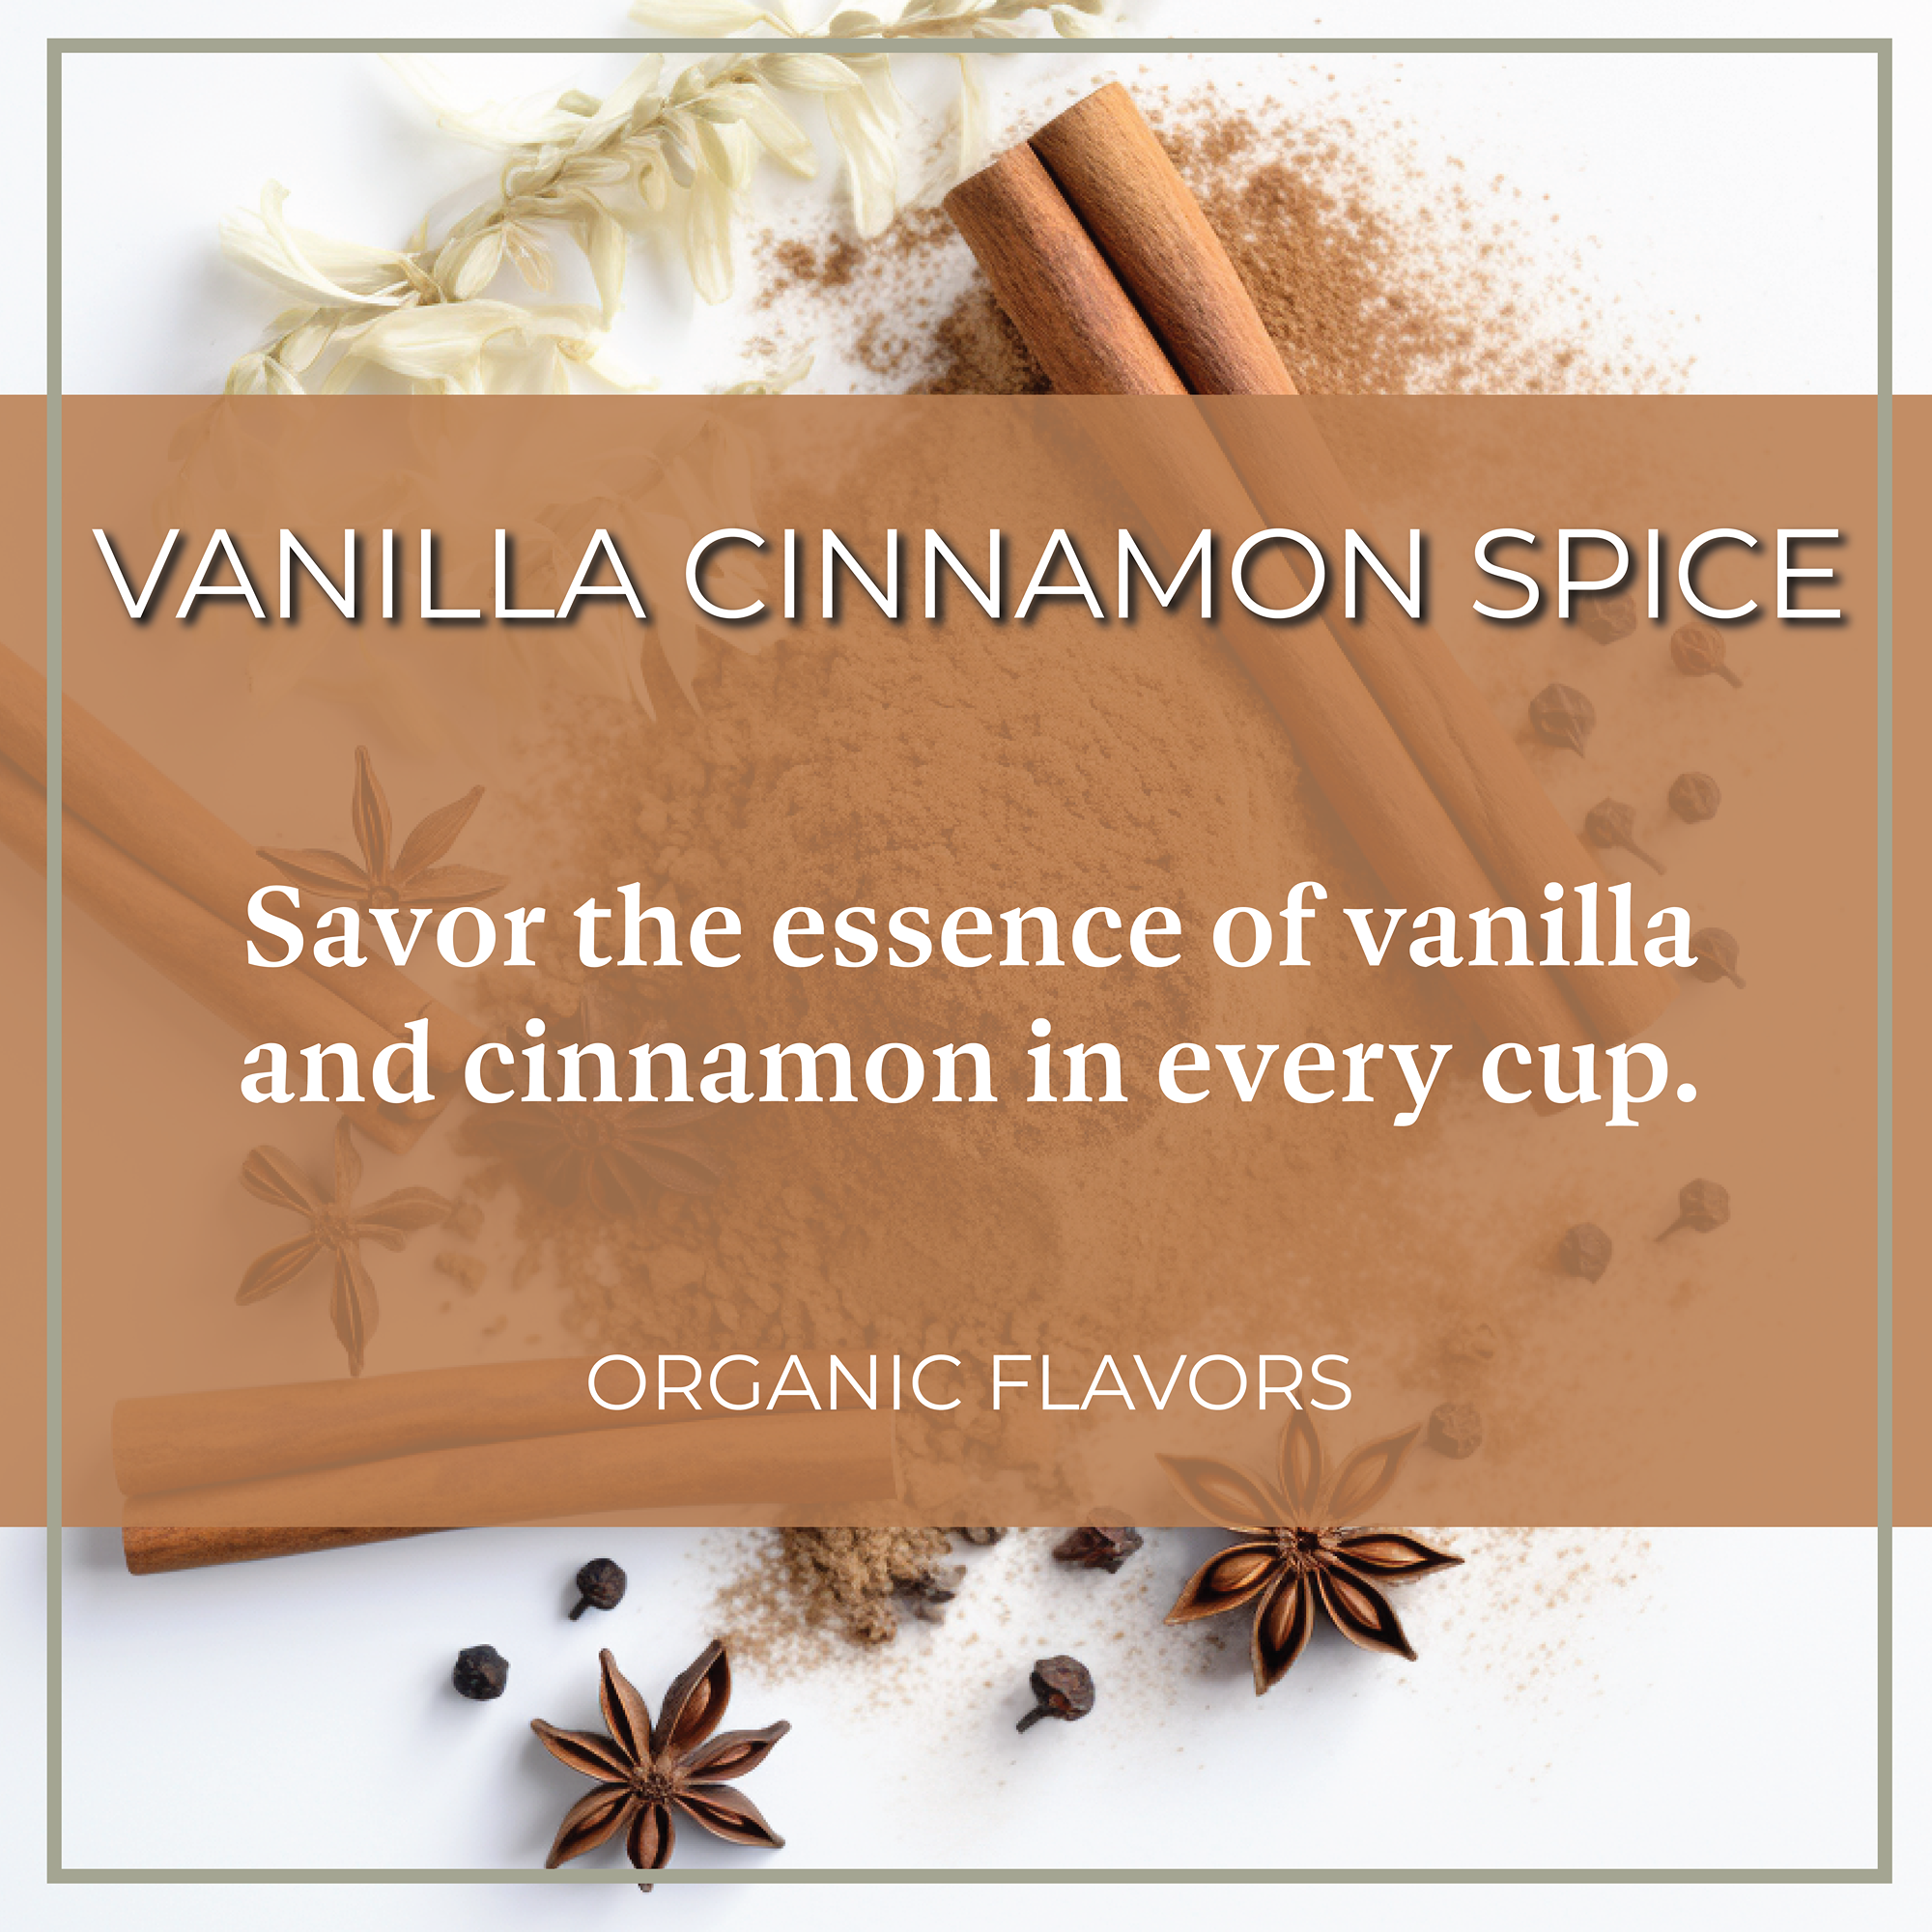 DECAF Organic Holiday Bean ~ Vanilla Cinnamon Spice Flavored Coffee